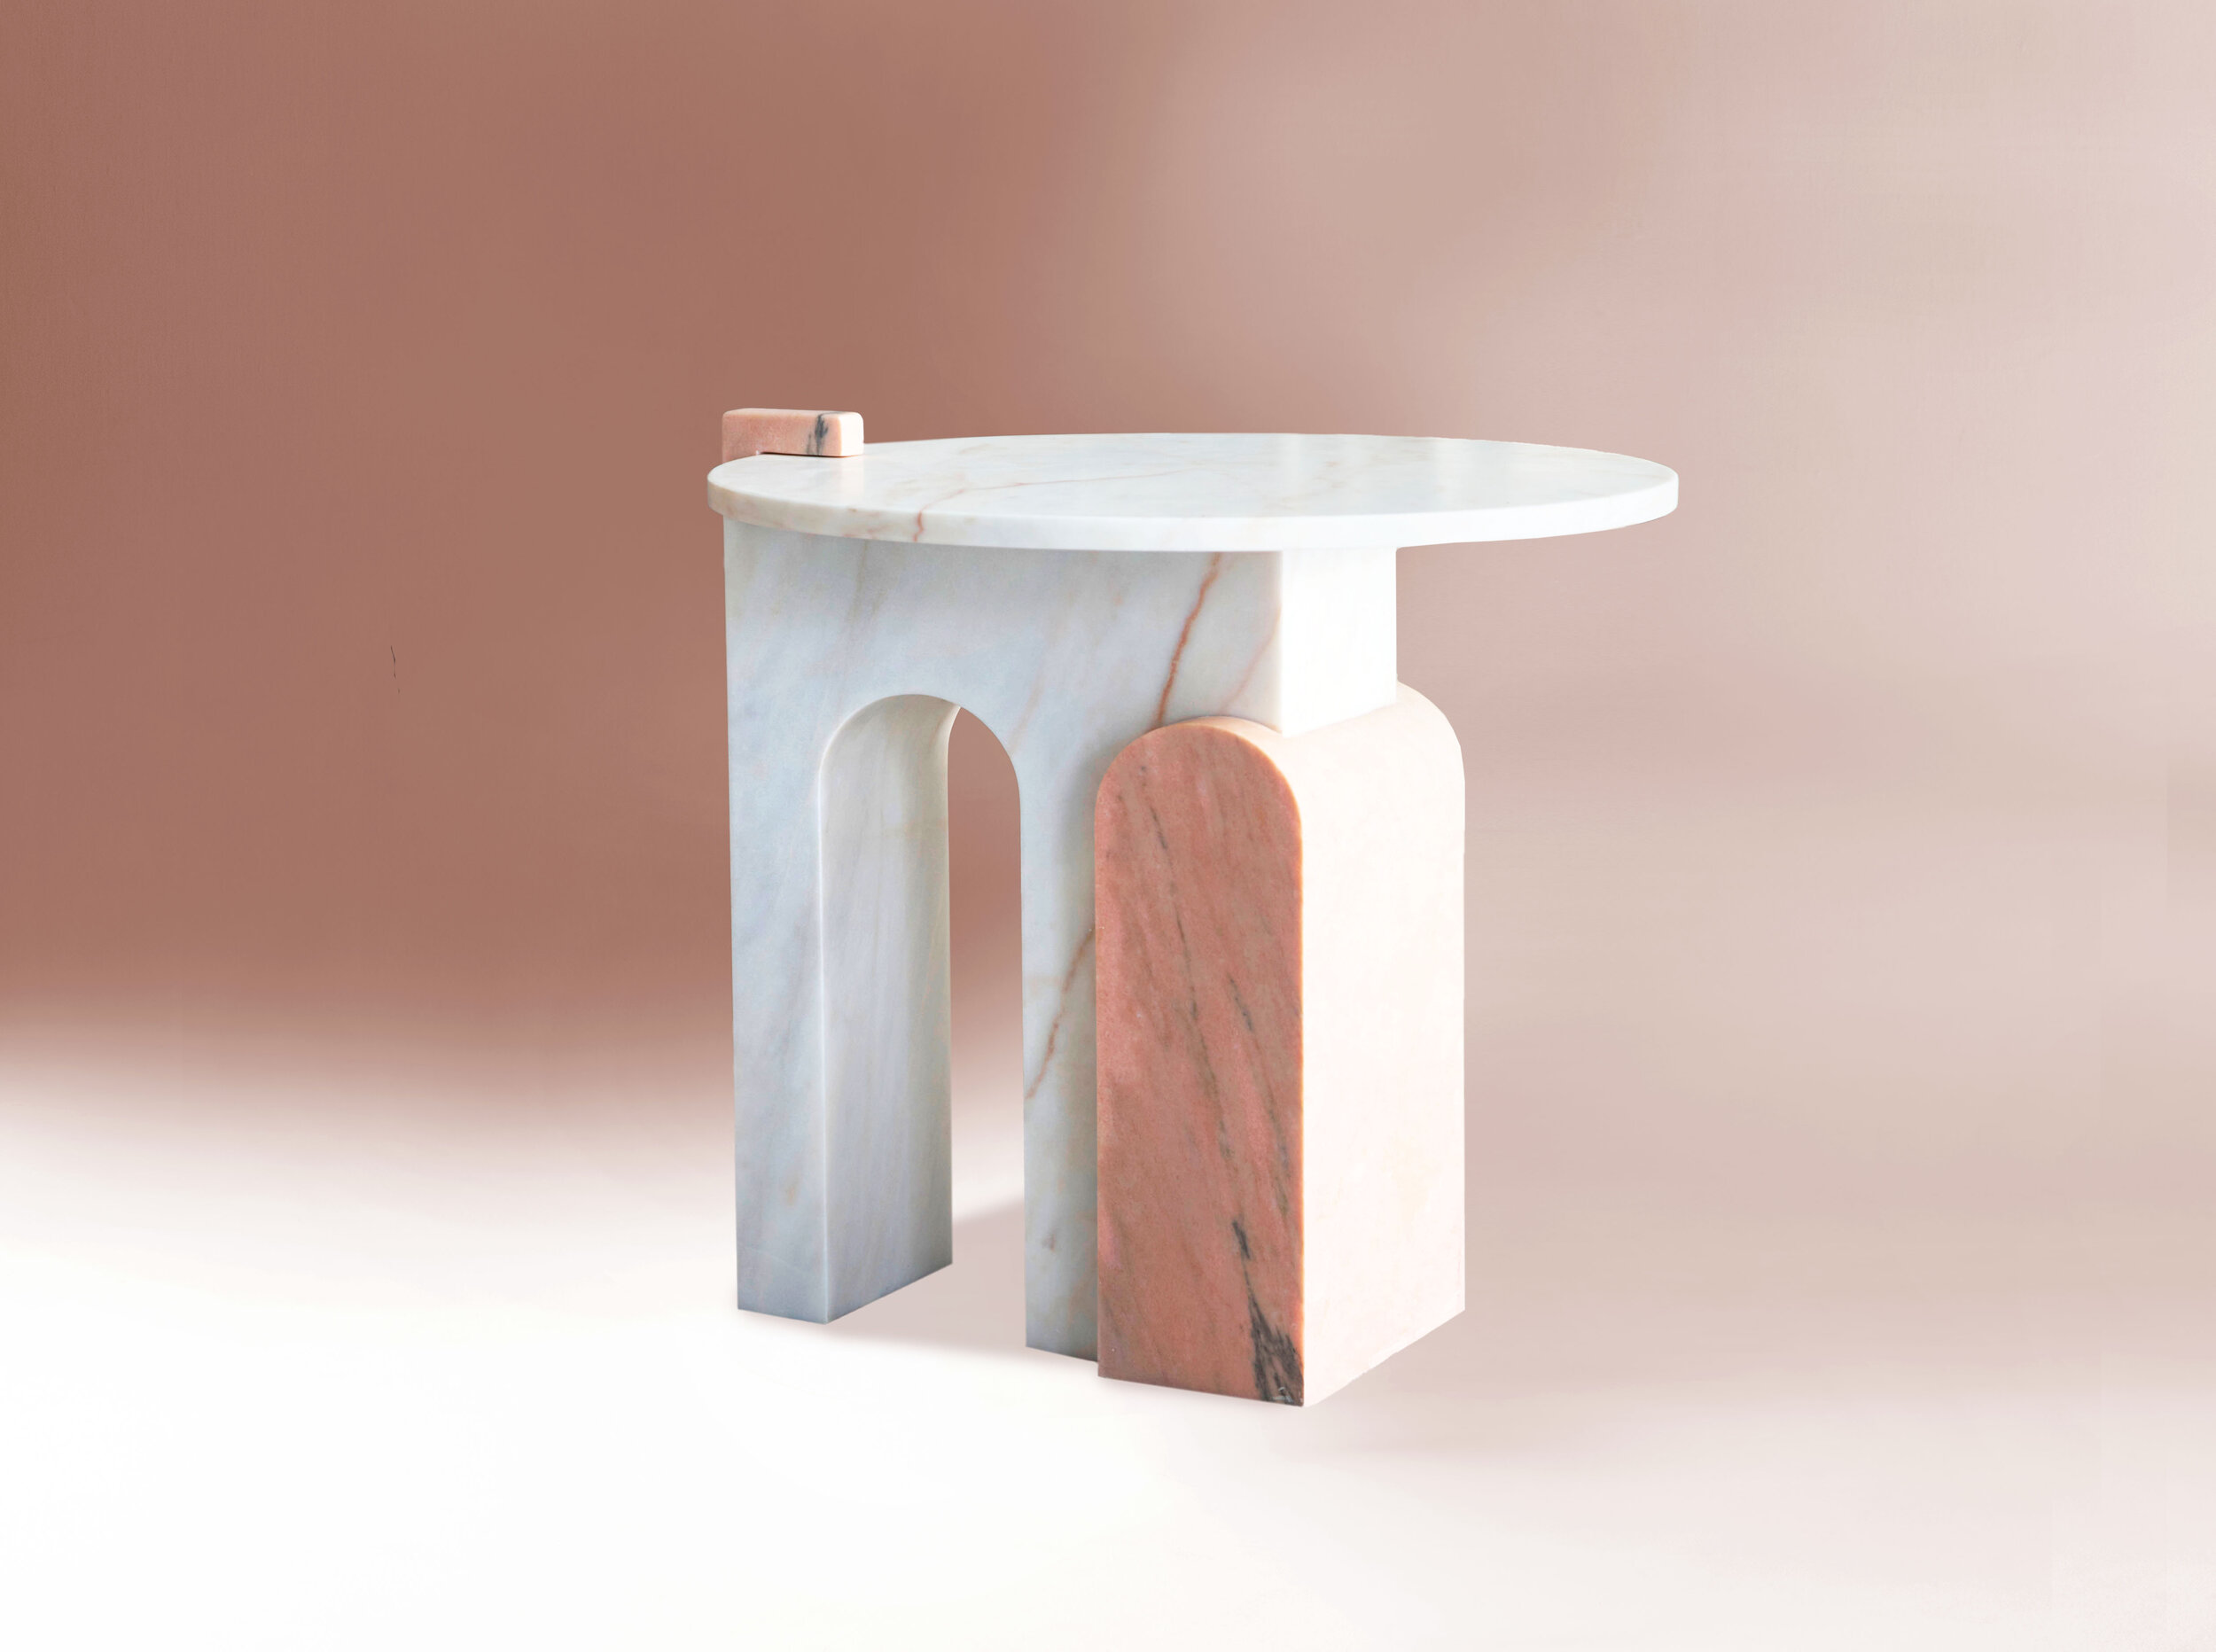 Stone table Dovain studio design Sergio Prieto.jpg